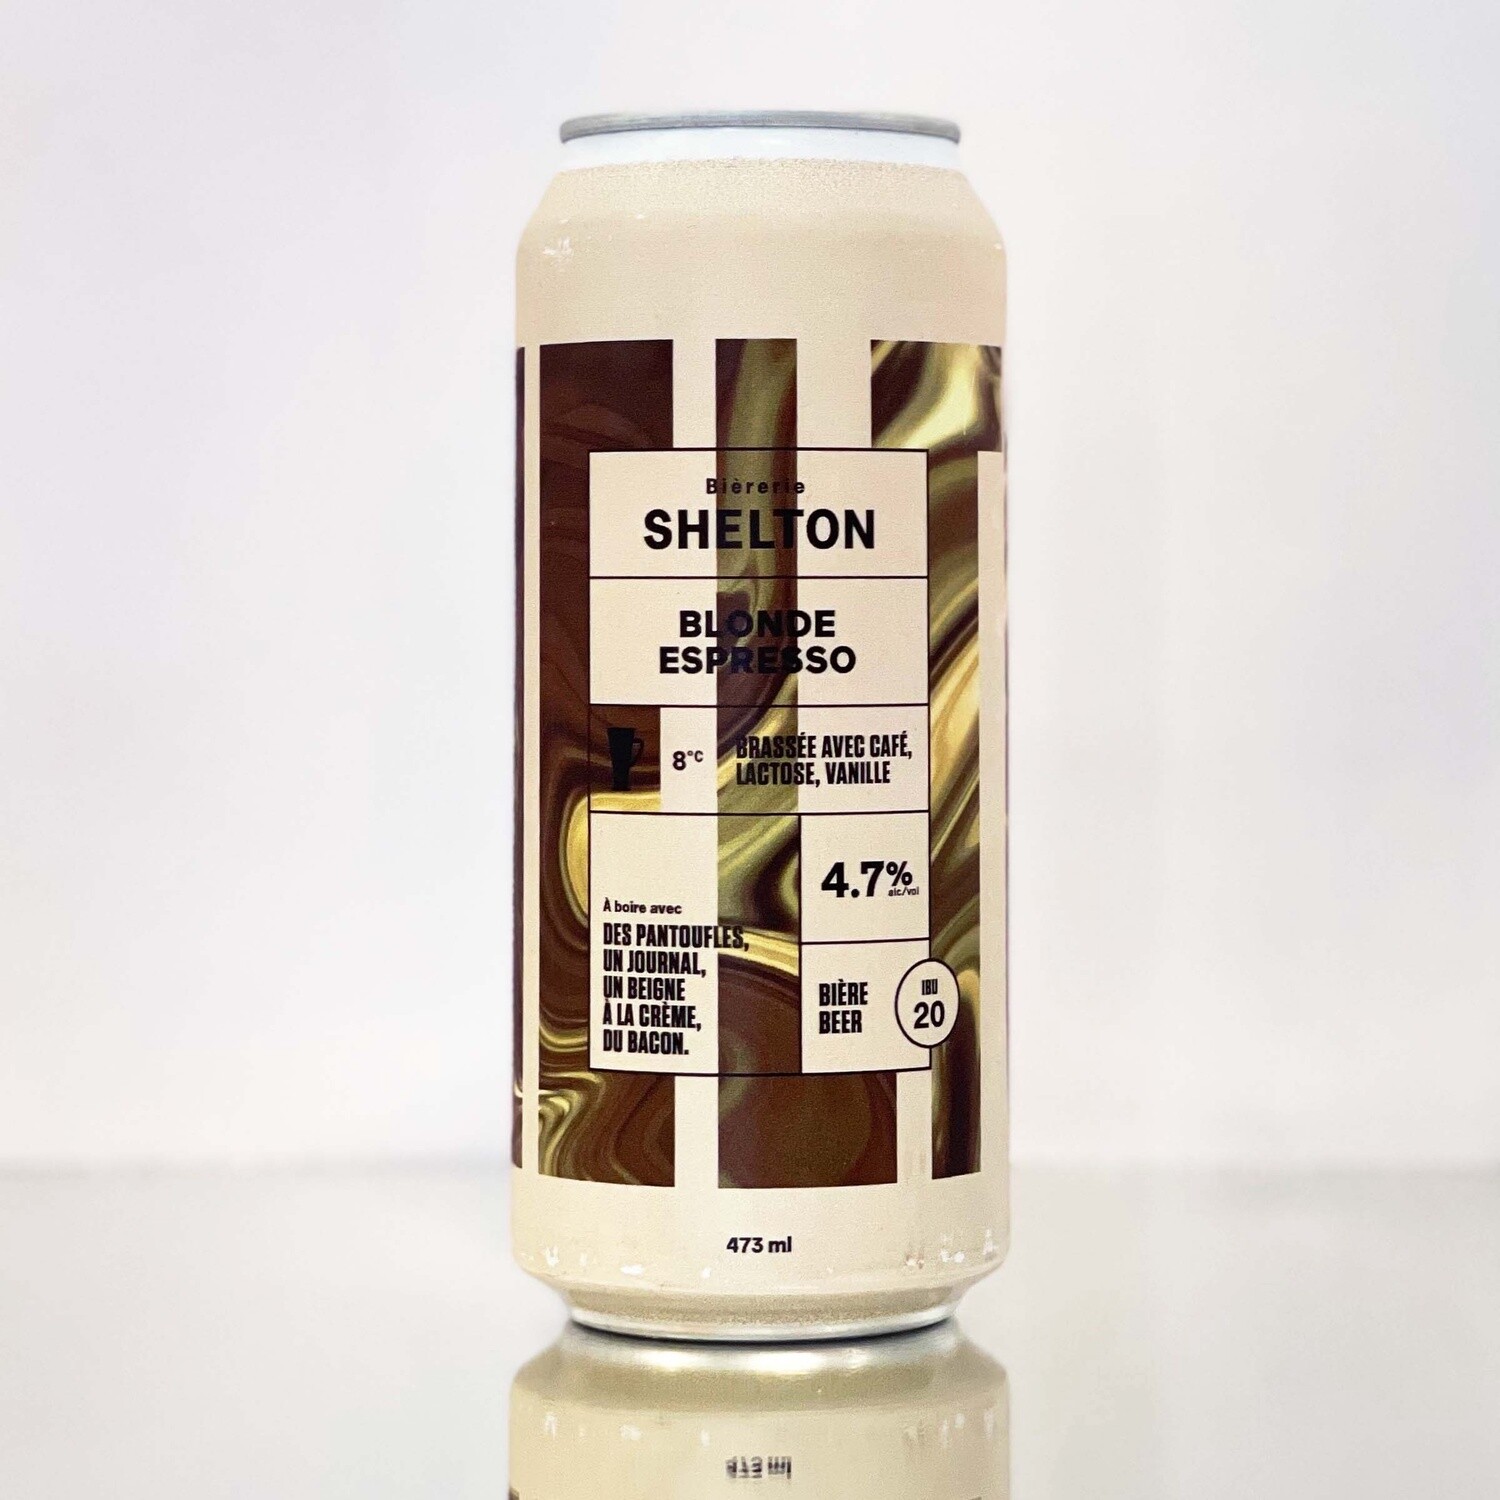 Shelton - Blonde Espresso